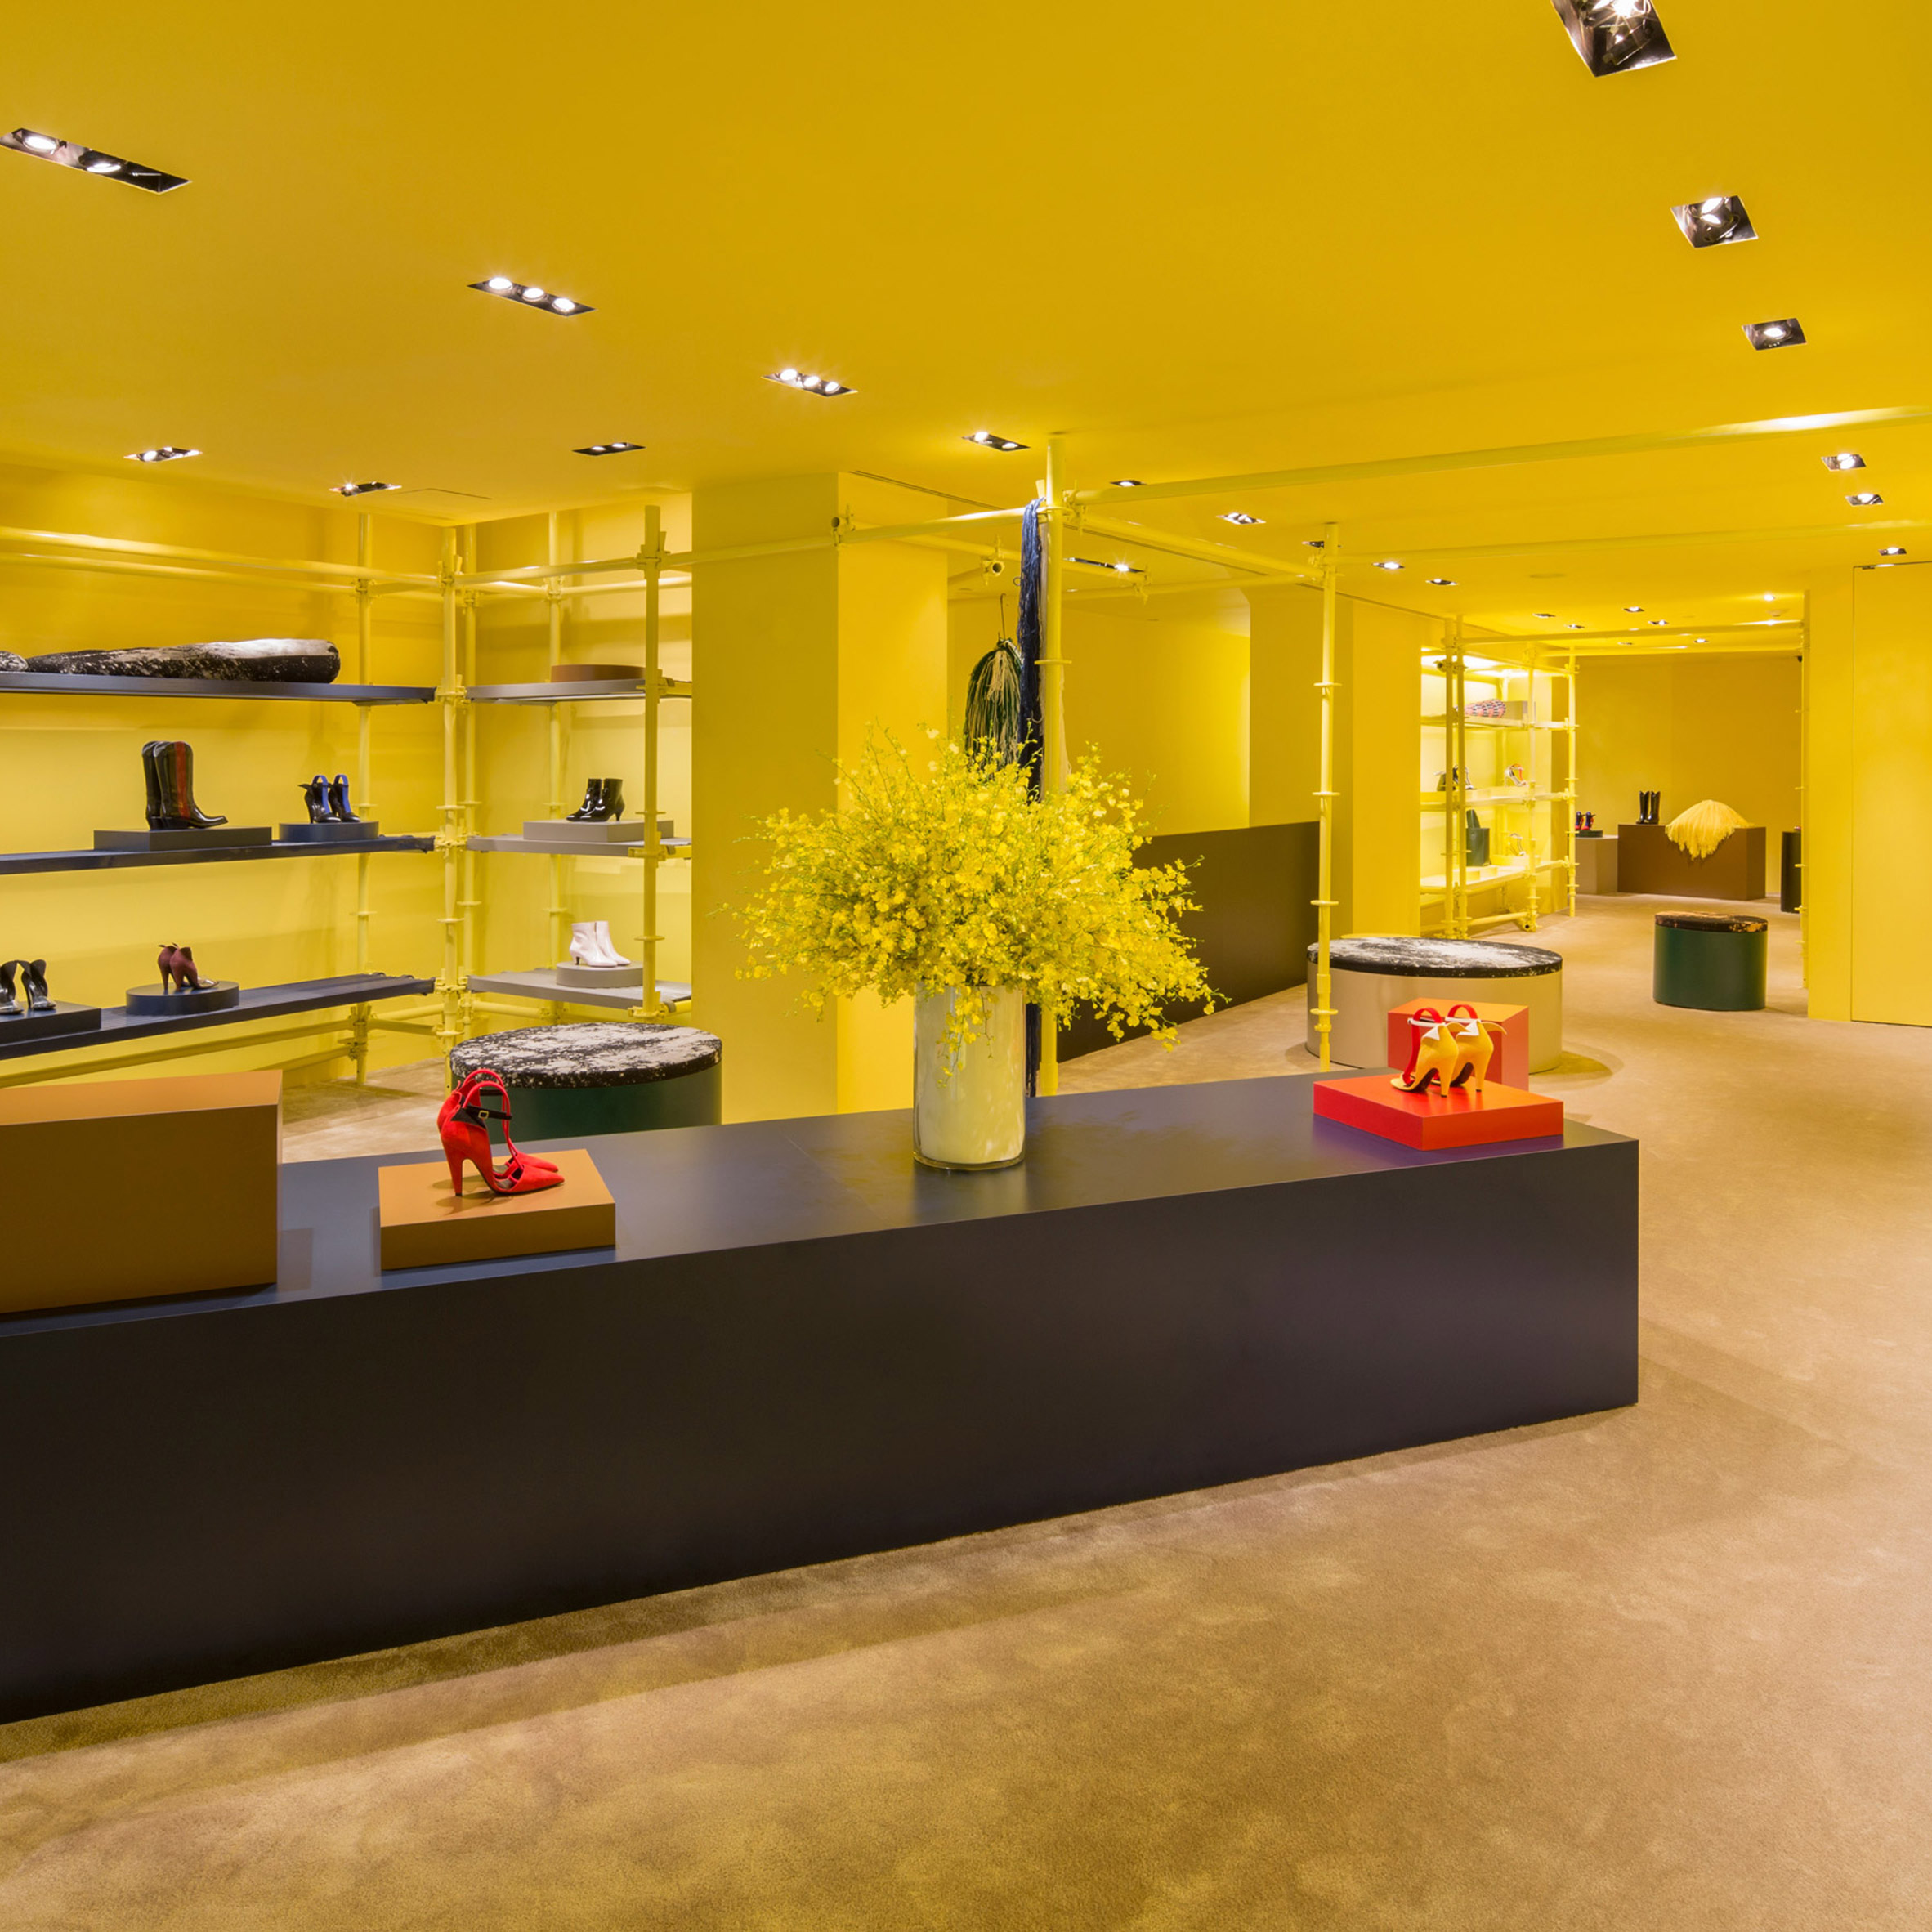 Calvin Klein Lifestyle Store  Area-17 Architecture and Interiors